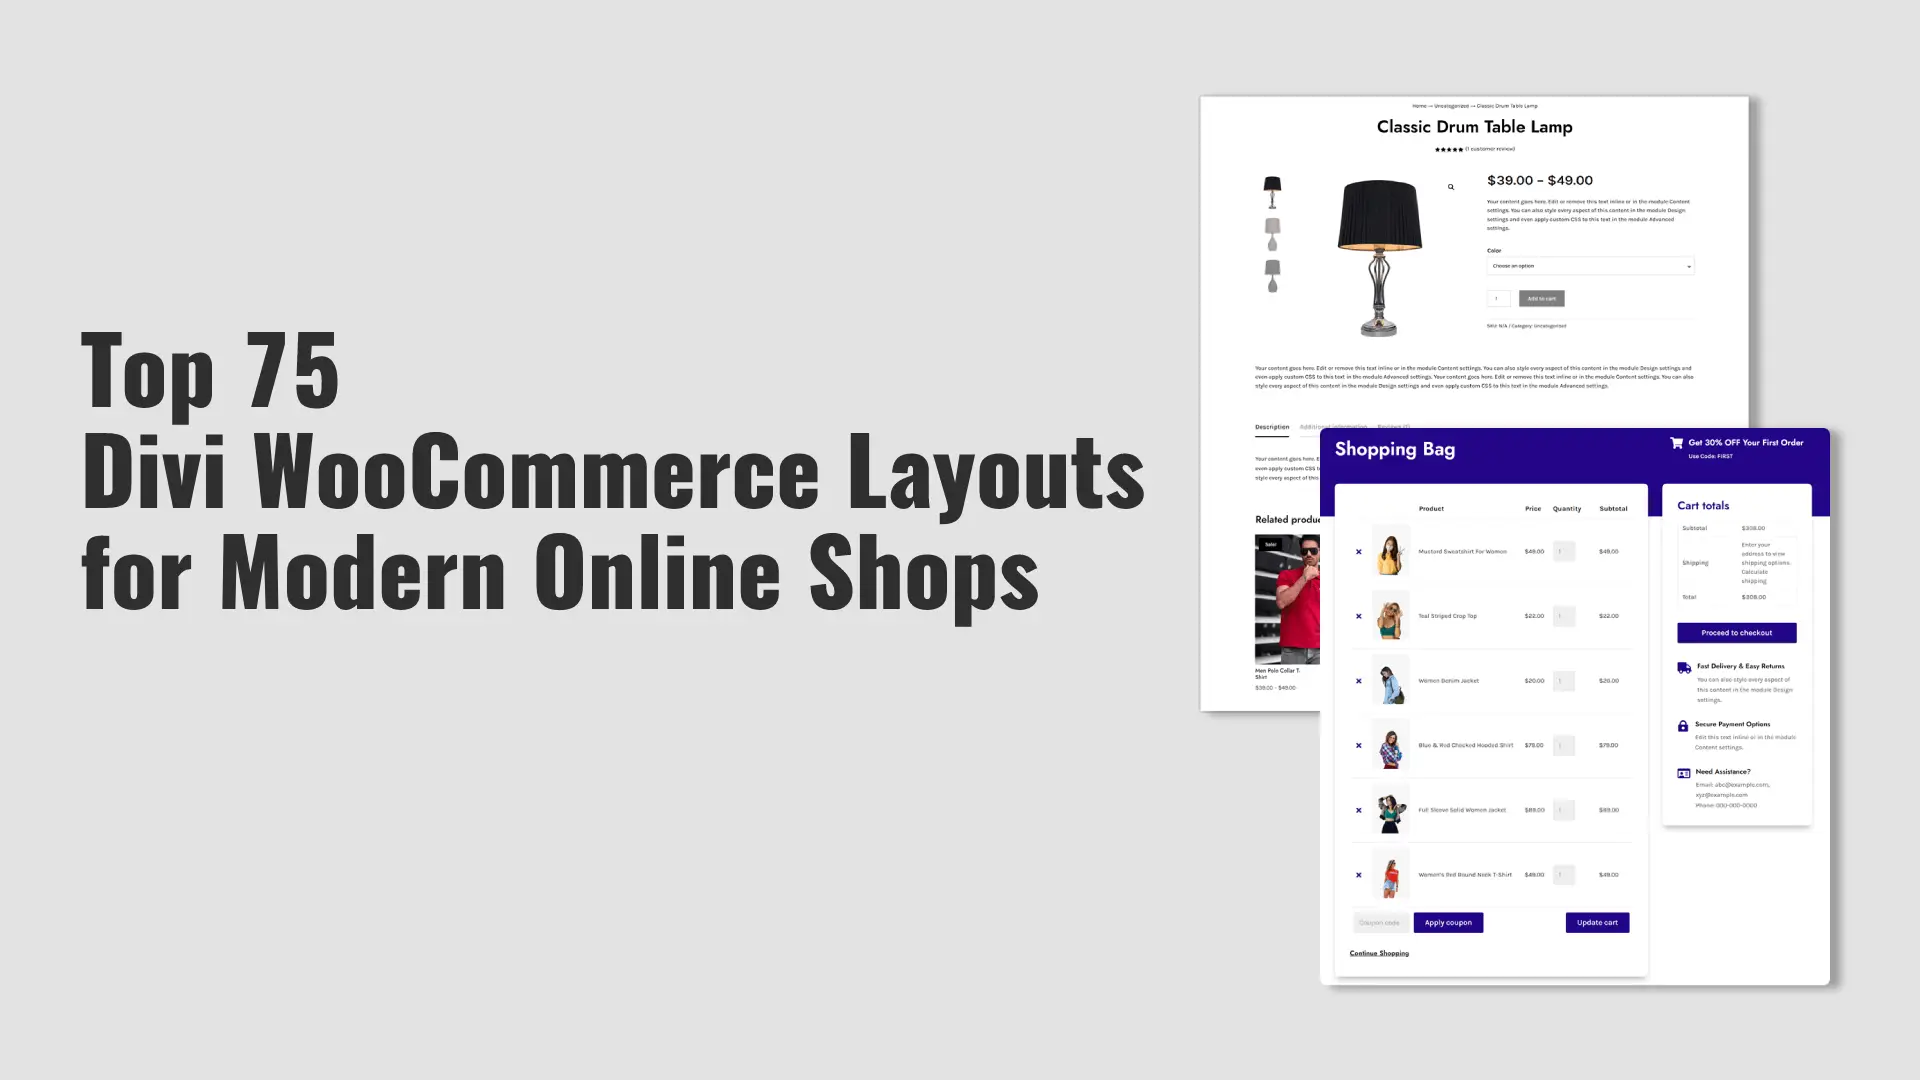 Top 75 Divi WooCommerce Layouts for Modern Online Shops